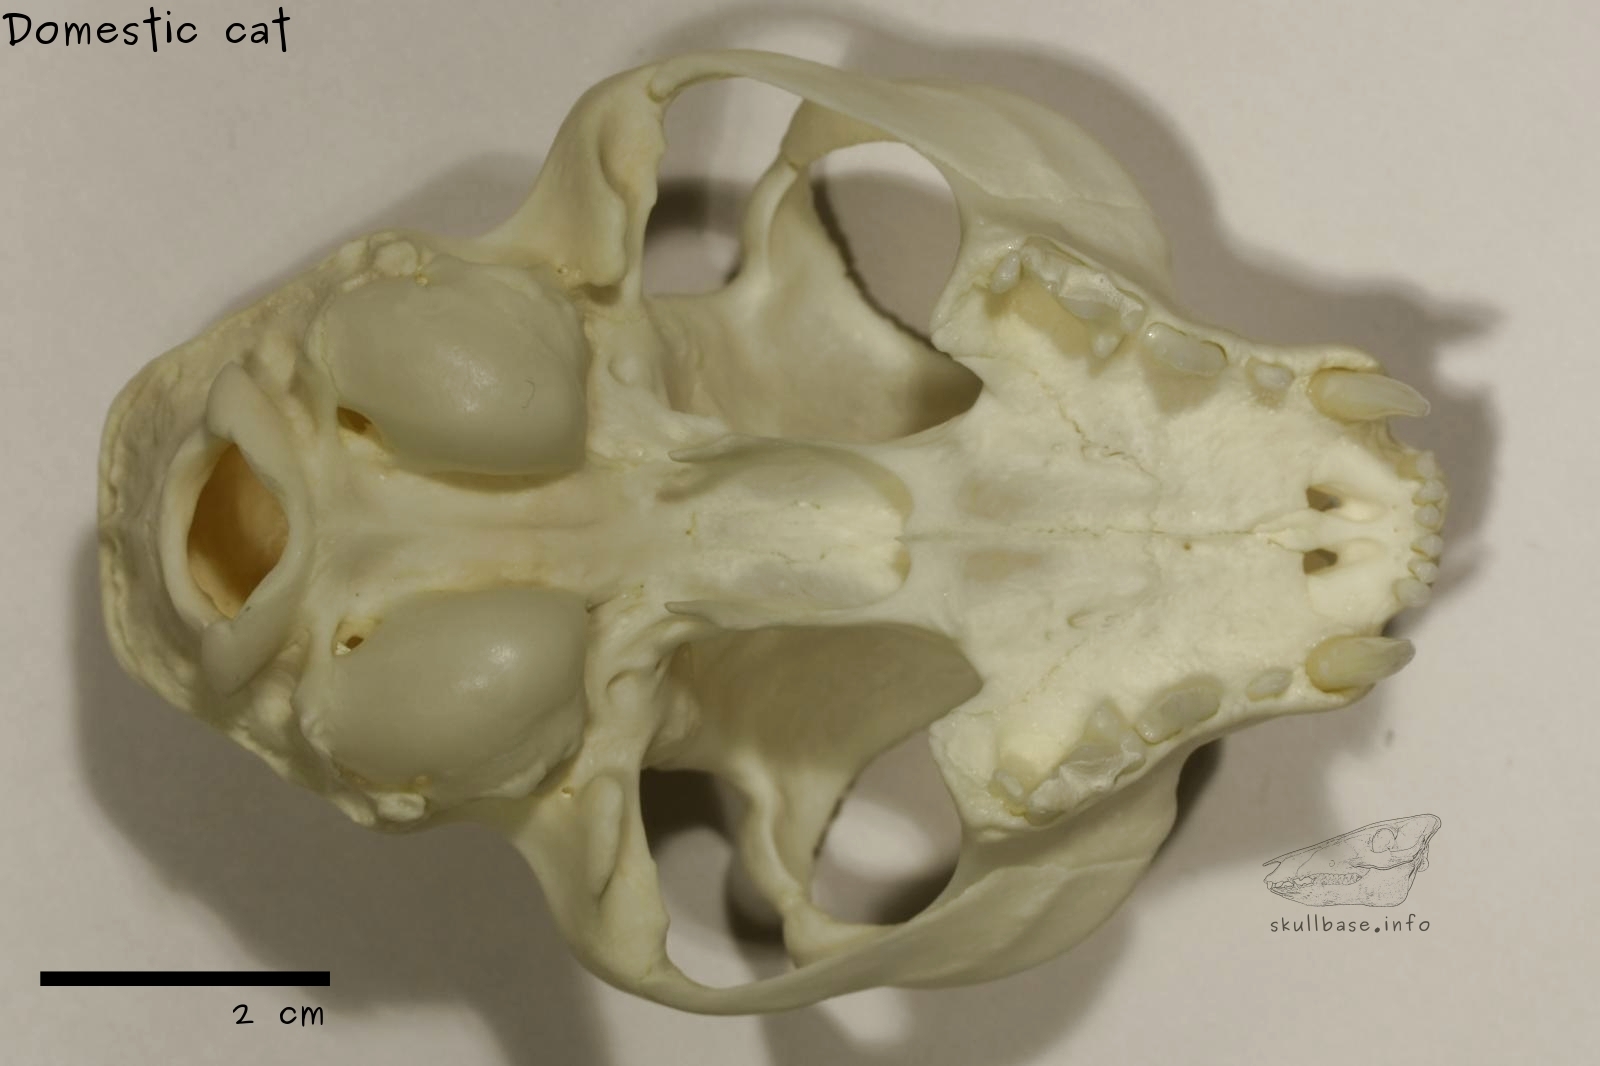 Domestic cat (Felis catus) skull ventral view